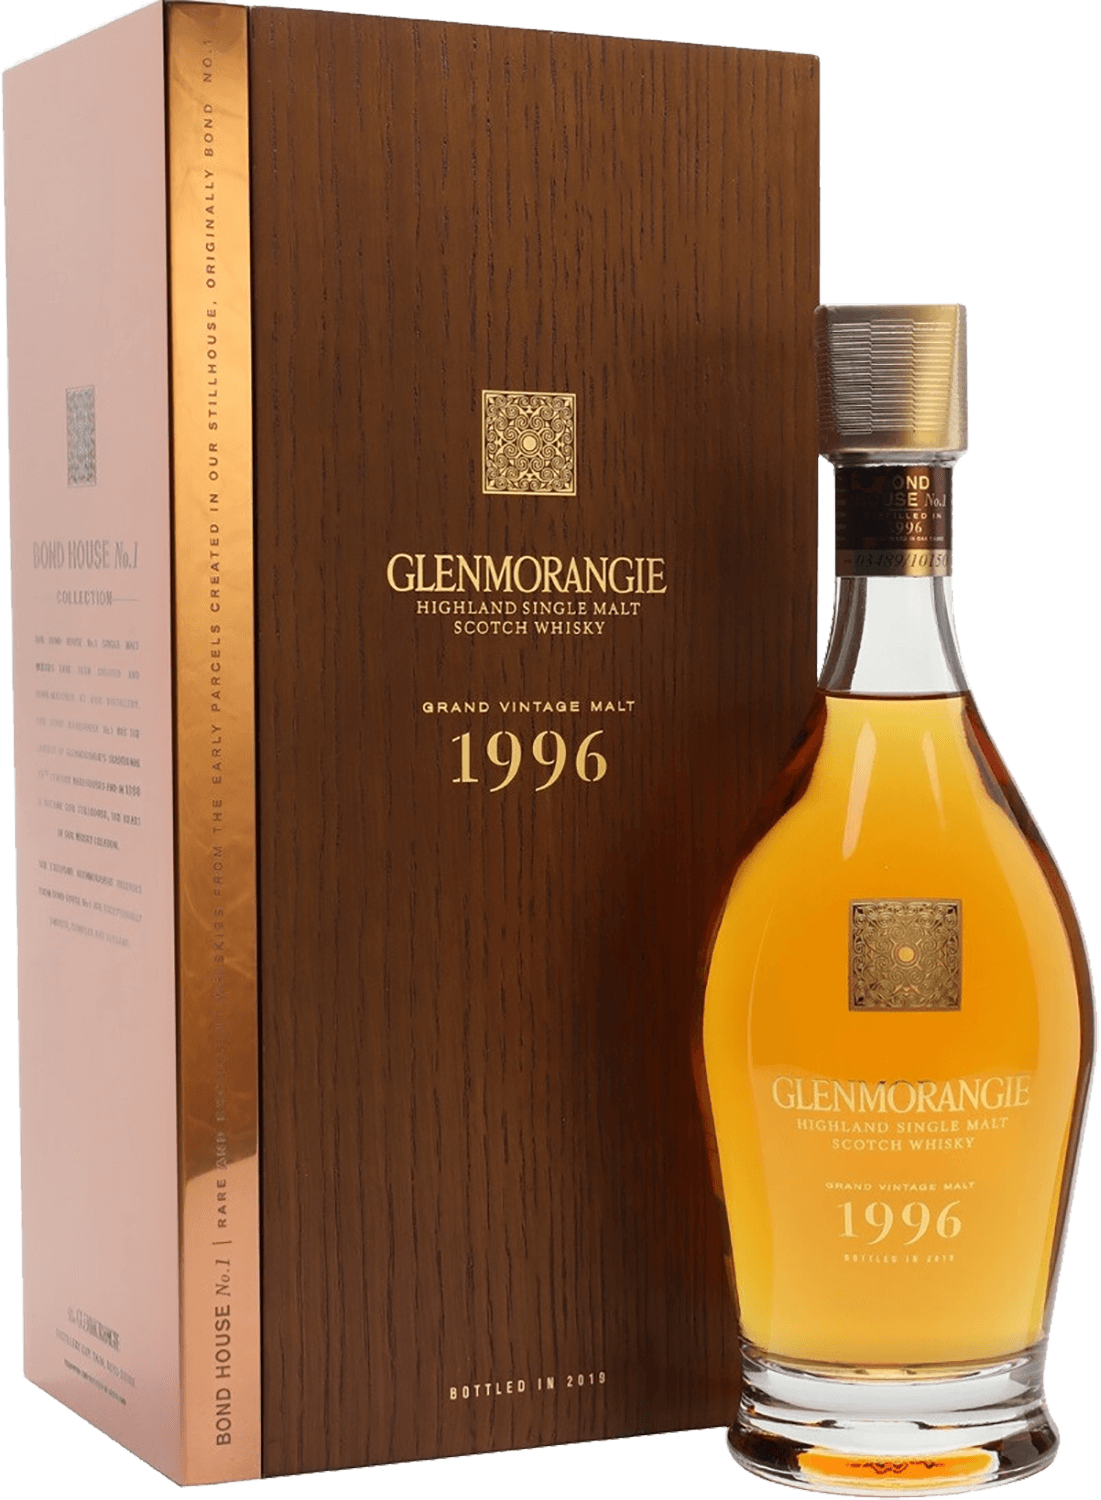 Glenmorangie Grand Vintage Malt Highland Single Malt Scotch Whisky (gift box) highland queen majesty single malt scotch whisky 14 y o gift box